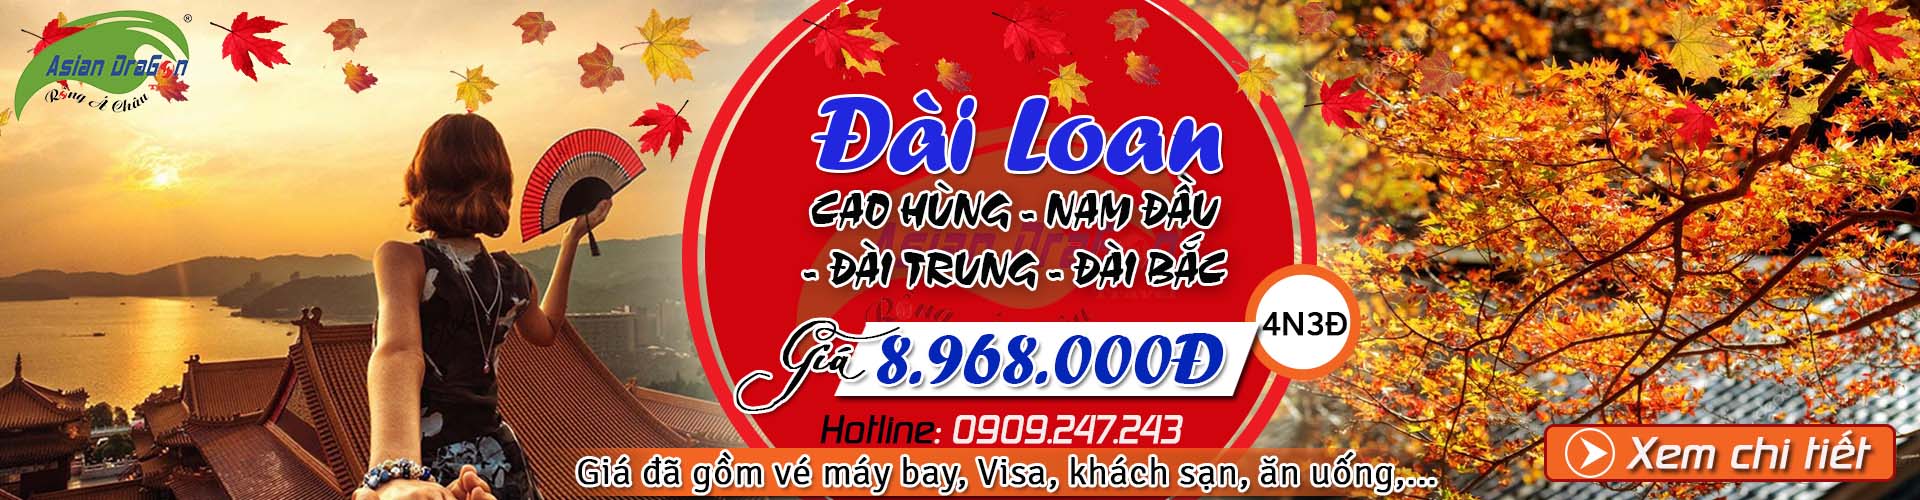 https://www.dulichrongachau.vn/du-lich-dai-loan-4-ngay-3-dem-cao-hung-nam-dau-dai-trung-dai-bac